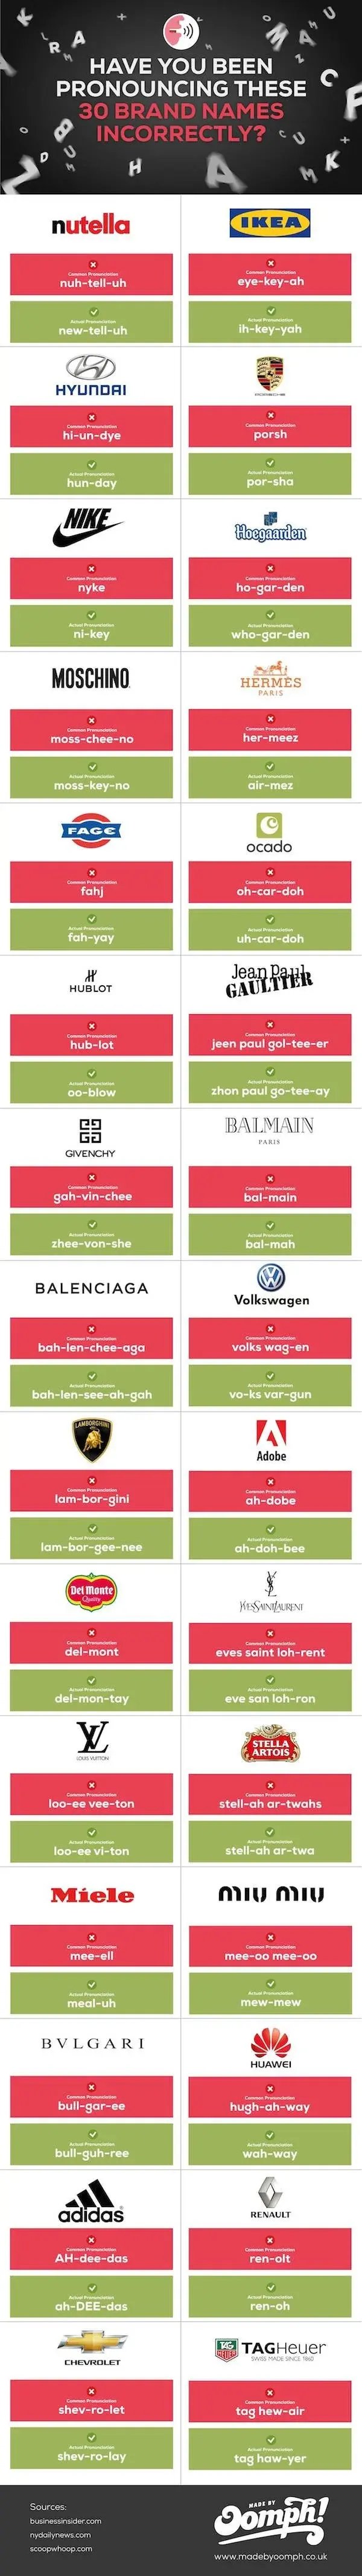 hard-to-pronounce-brand-names-infographic.jpg